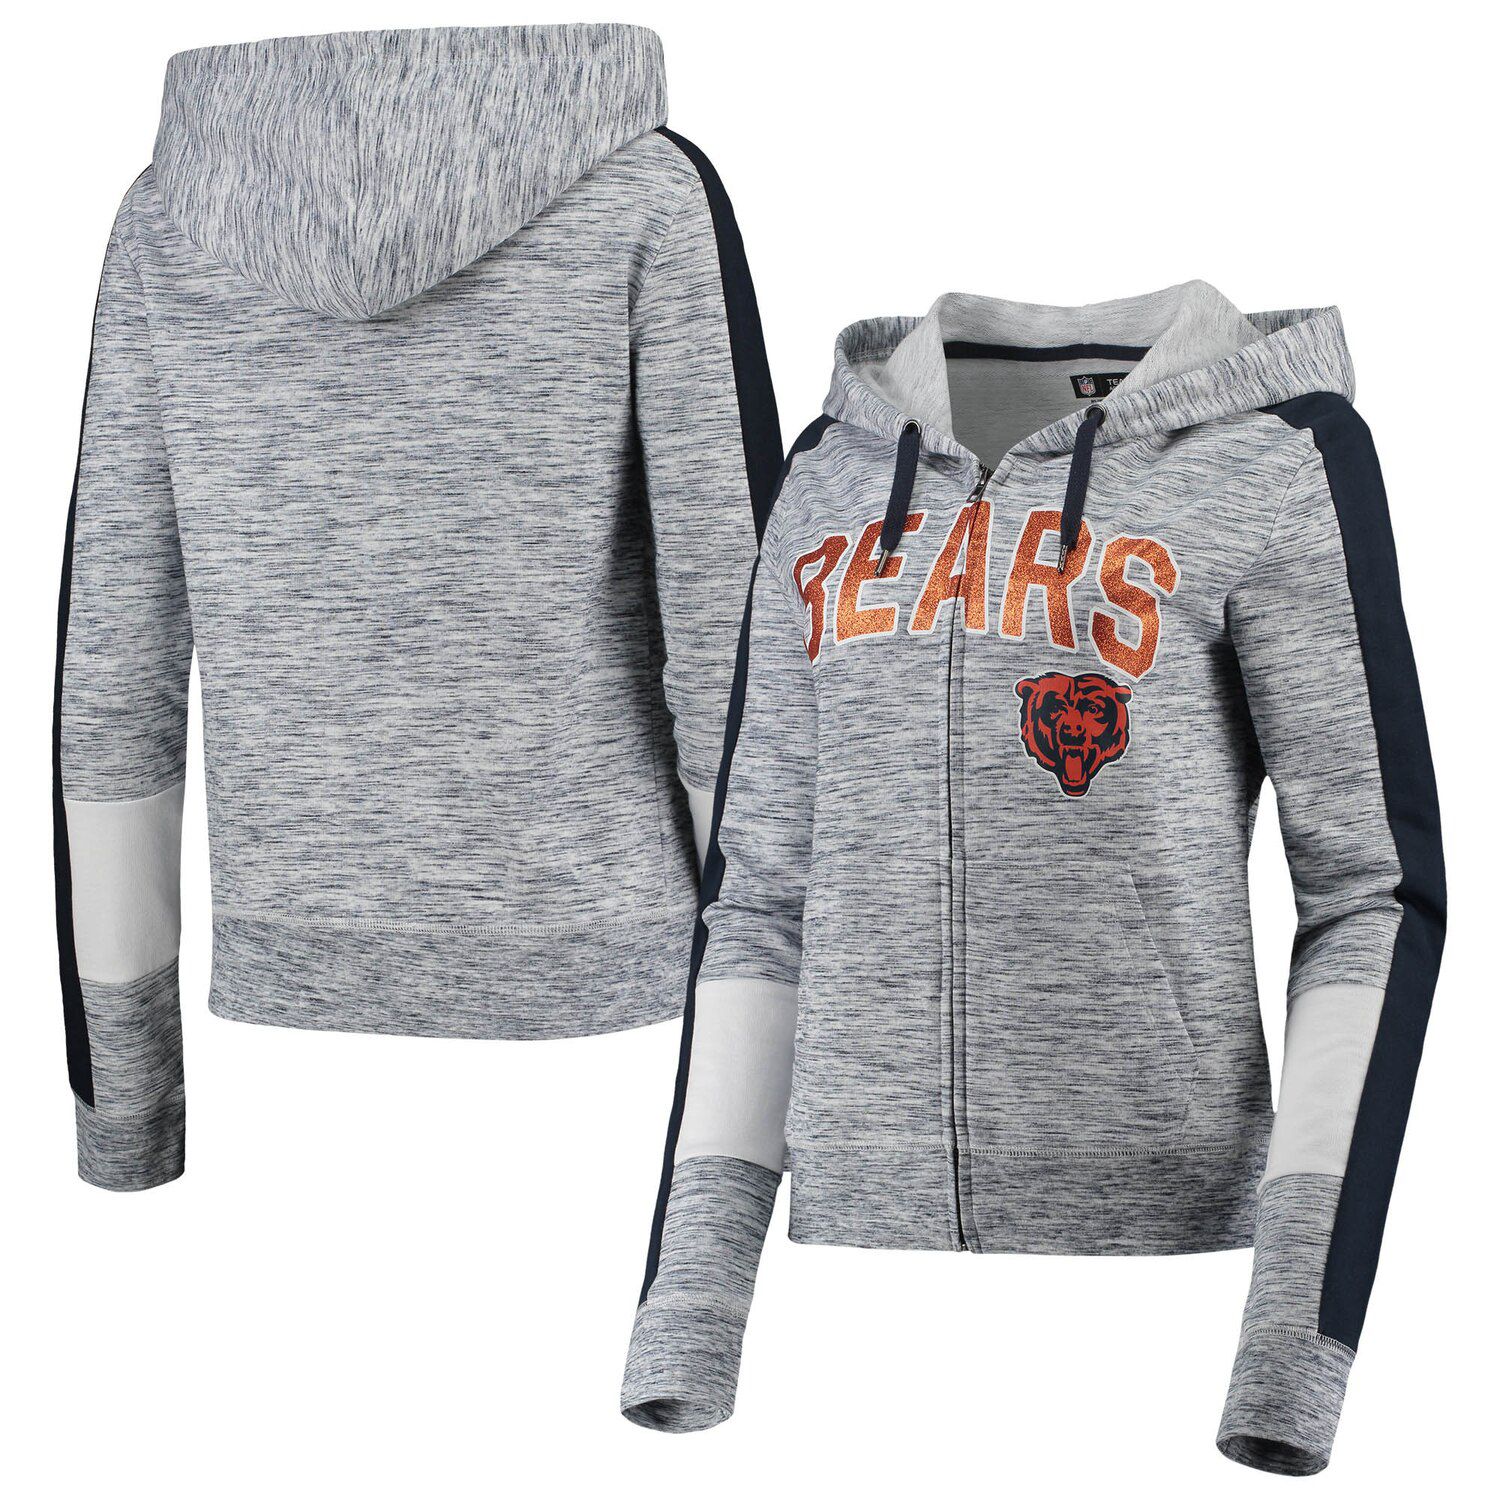 chicago bears womens zip up hoodie